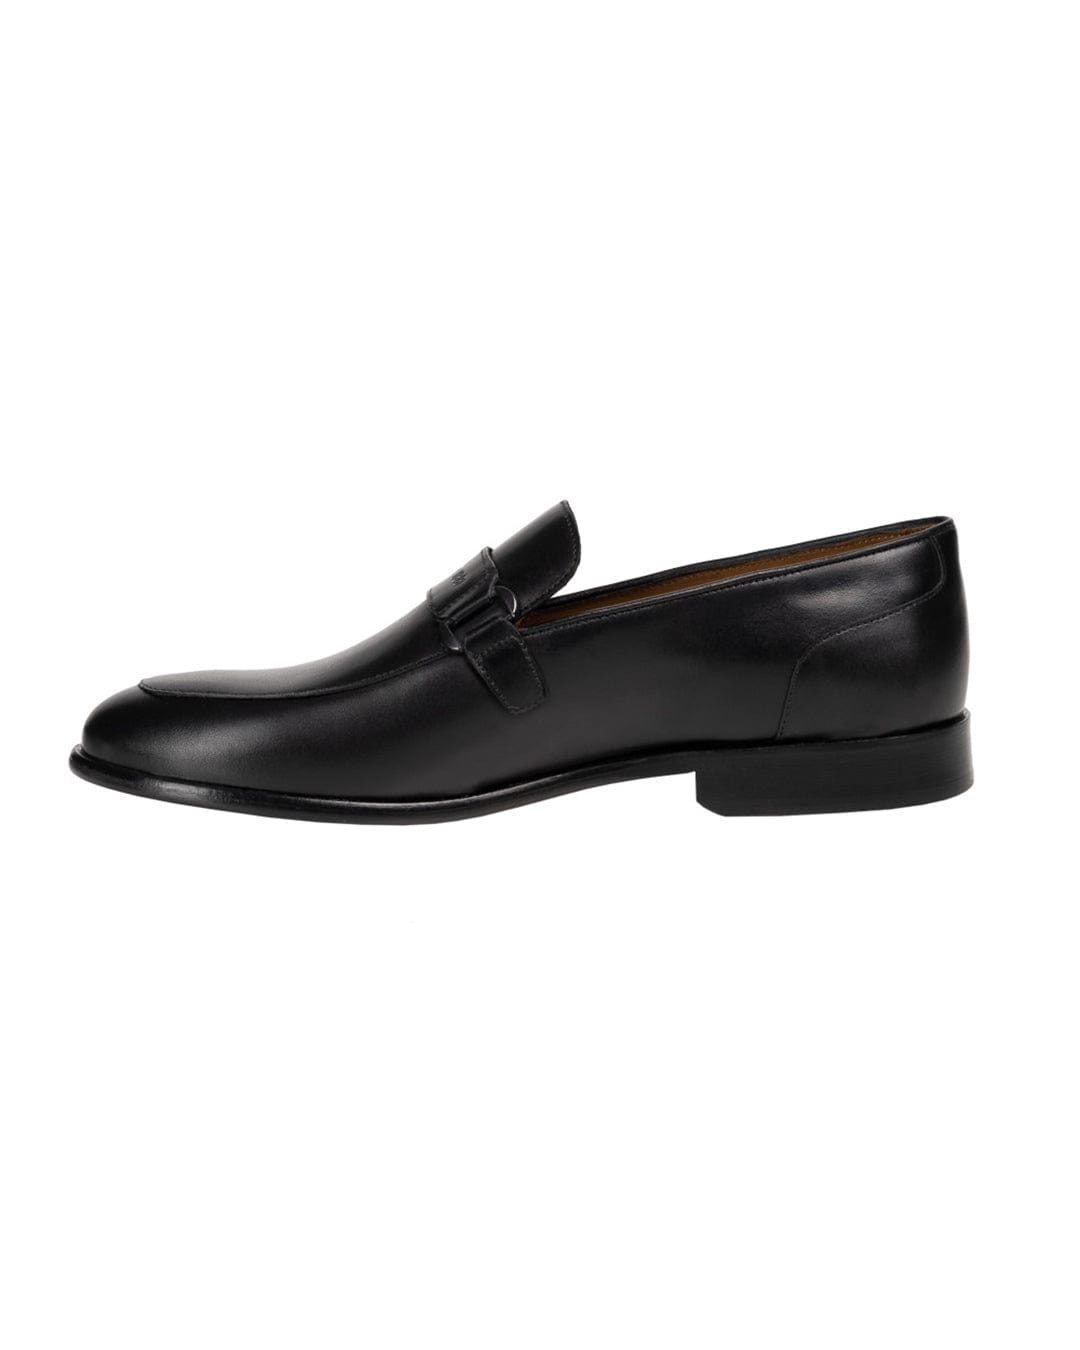 Cerruti Shoes Cerruti I88I Black Leather Loafers